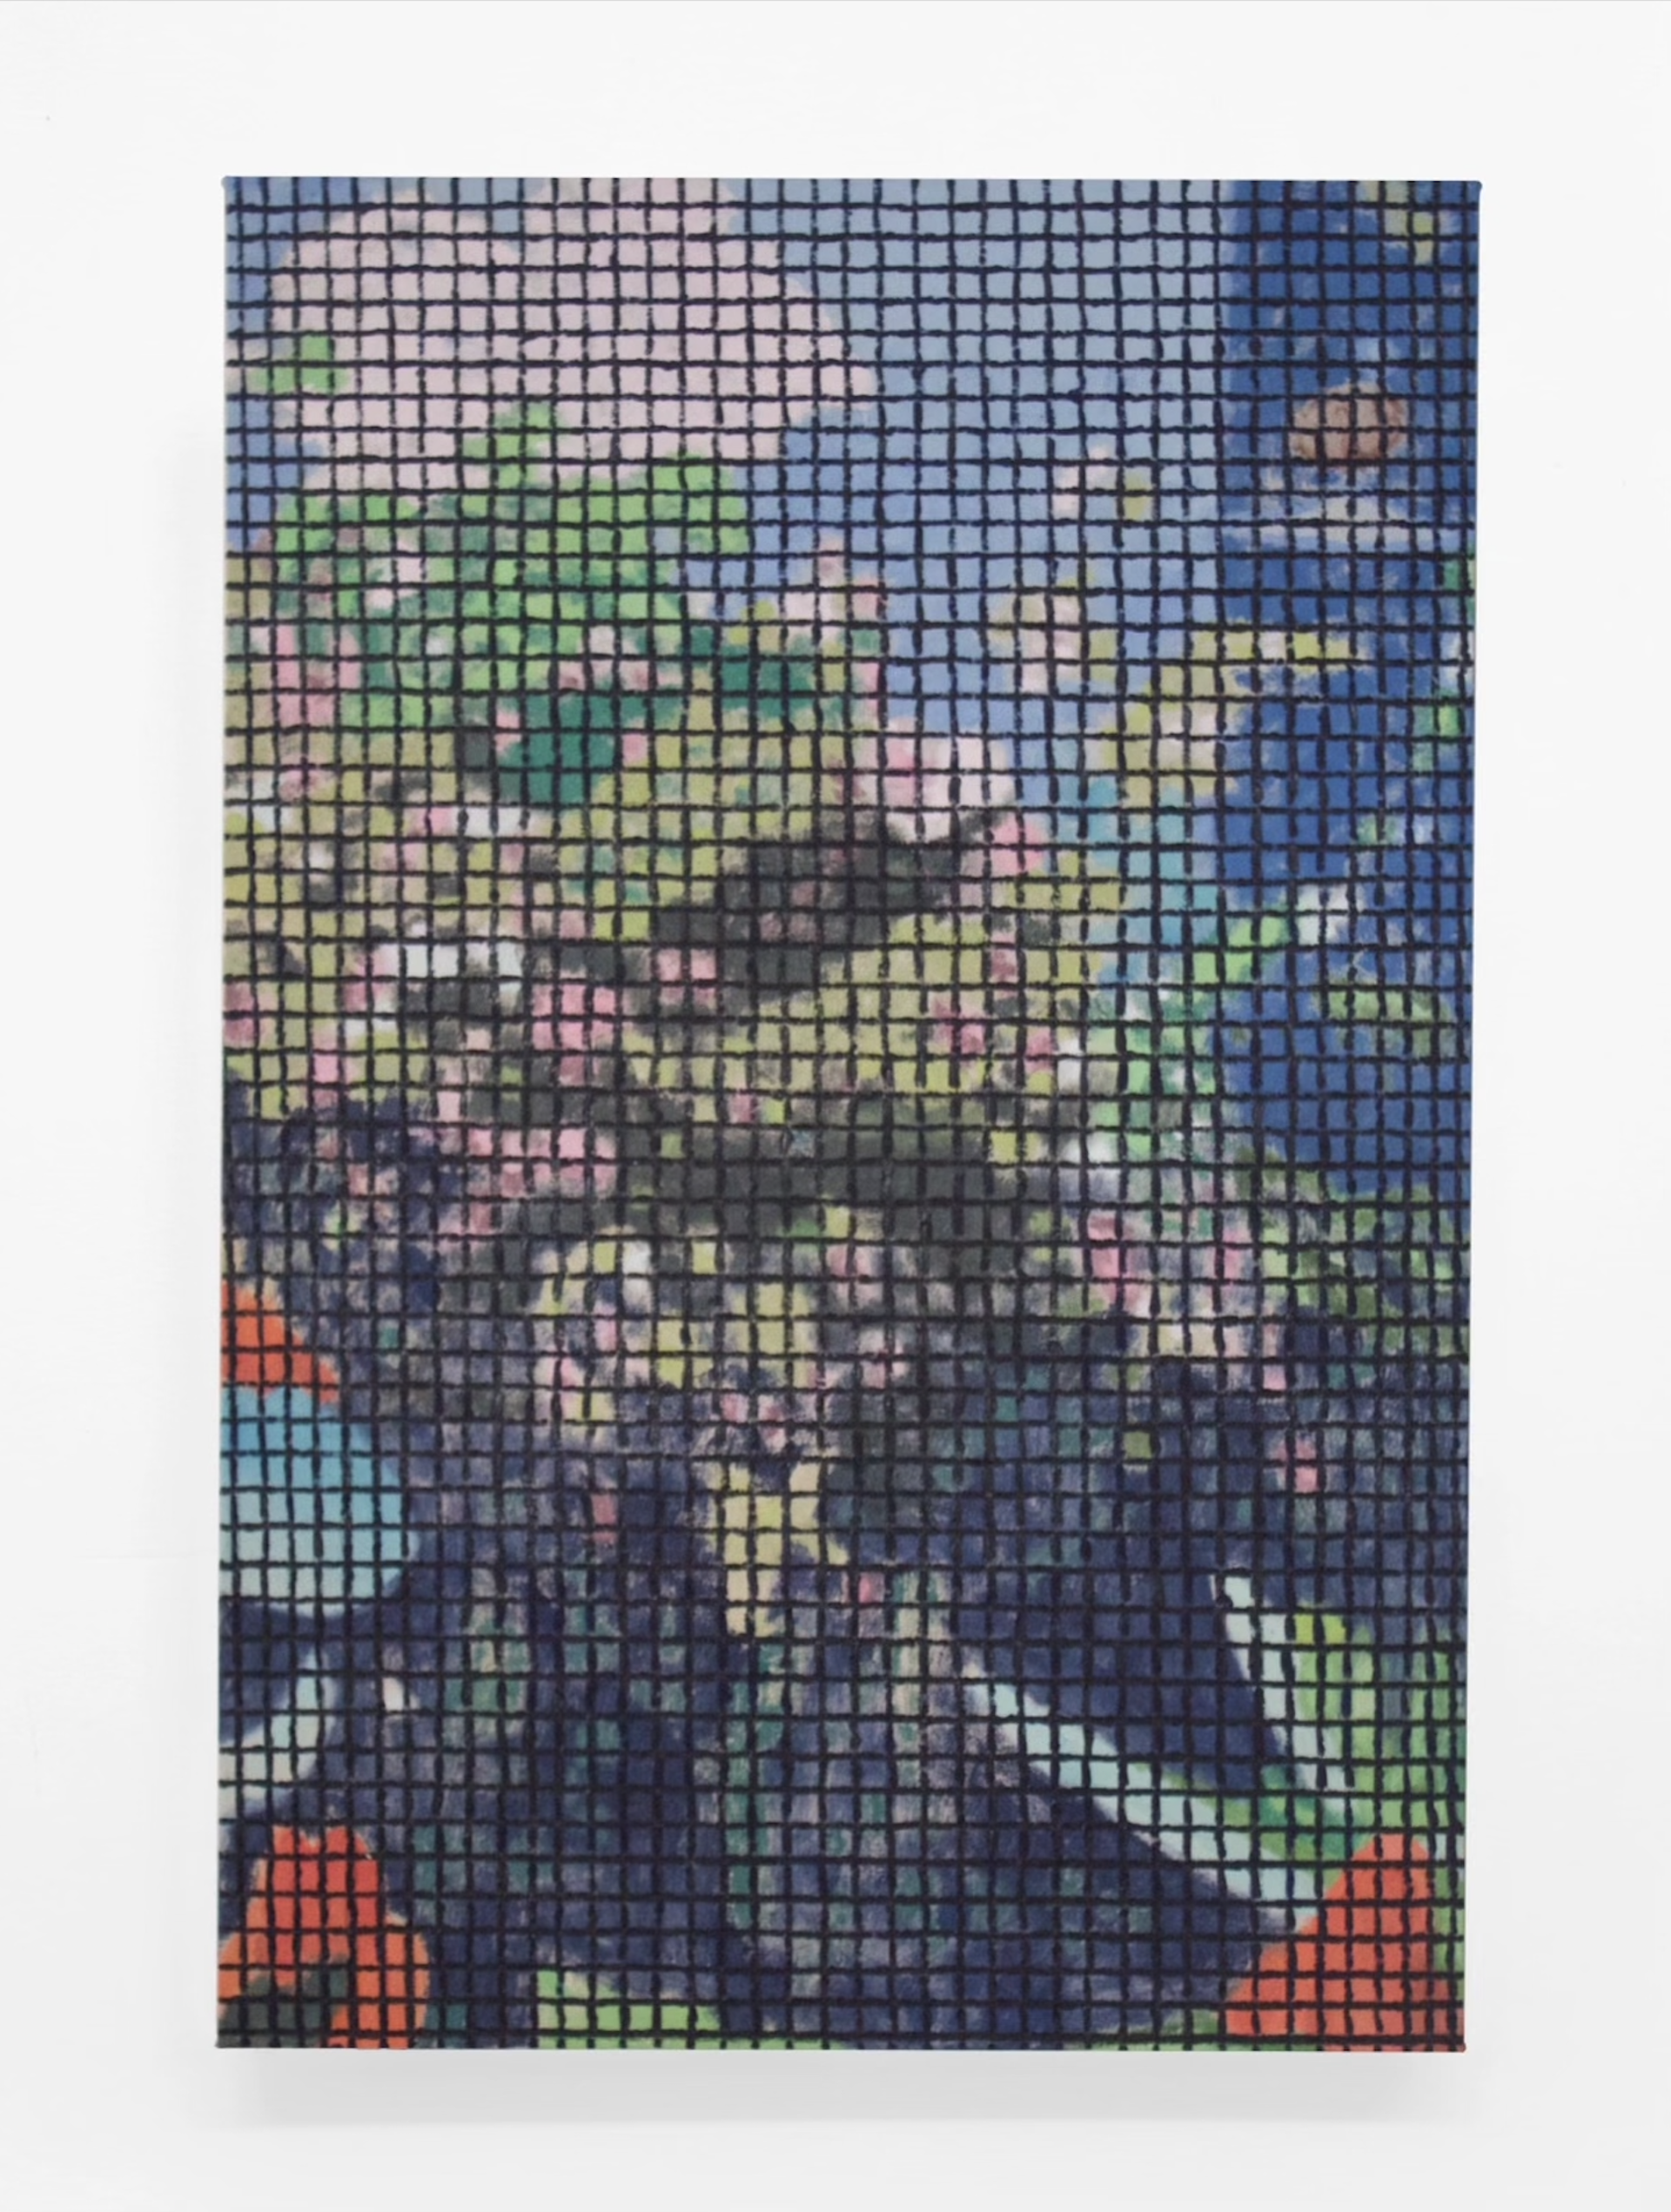 Flowers (Through a Screen) by Bradley Kerl